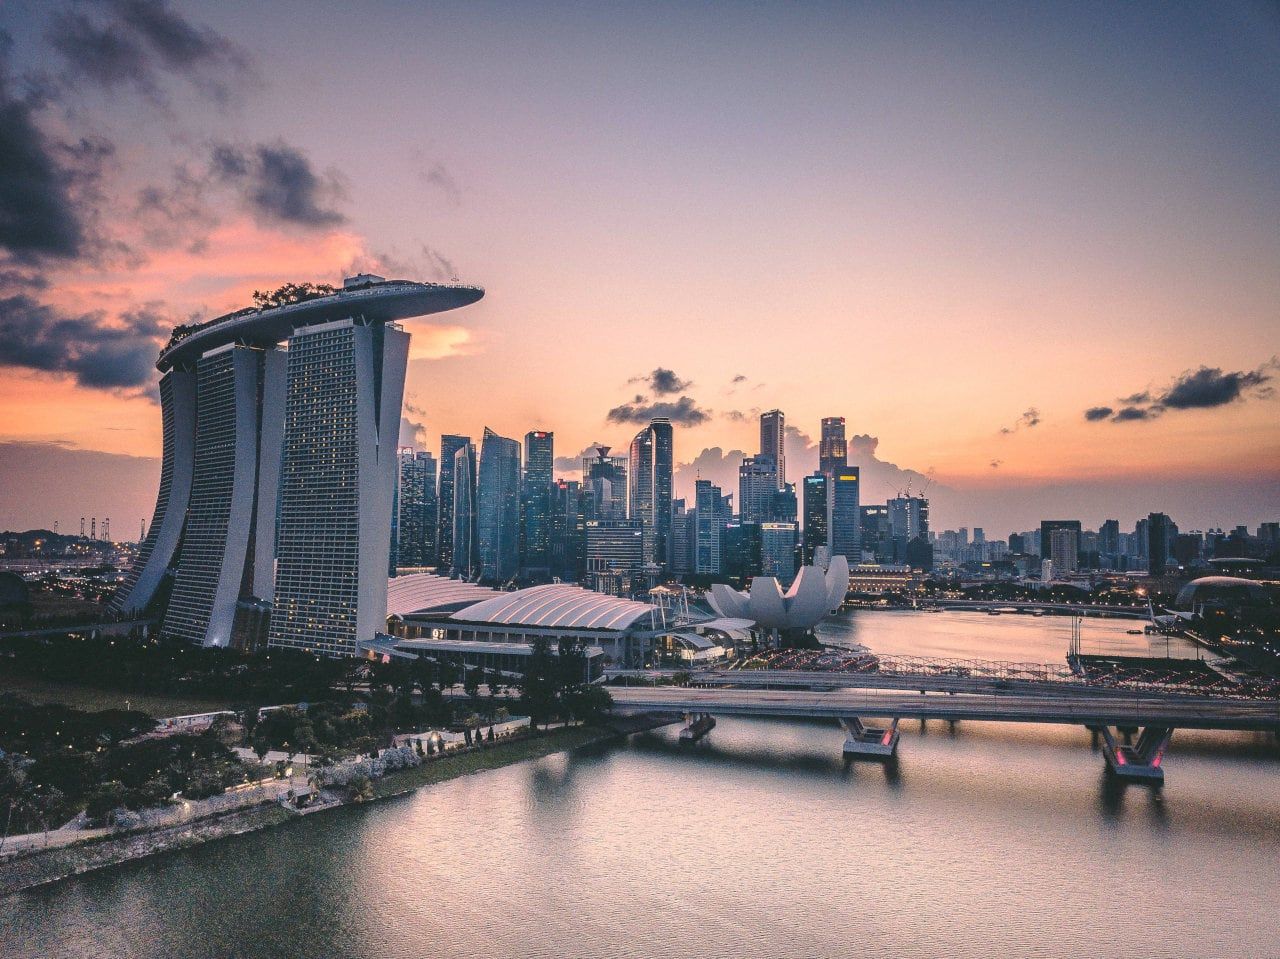 Marina Bay Sands Singapore 2